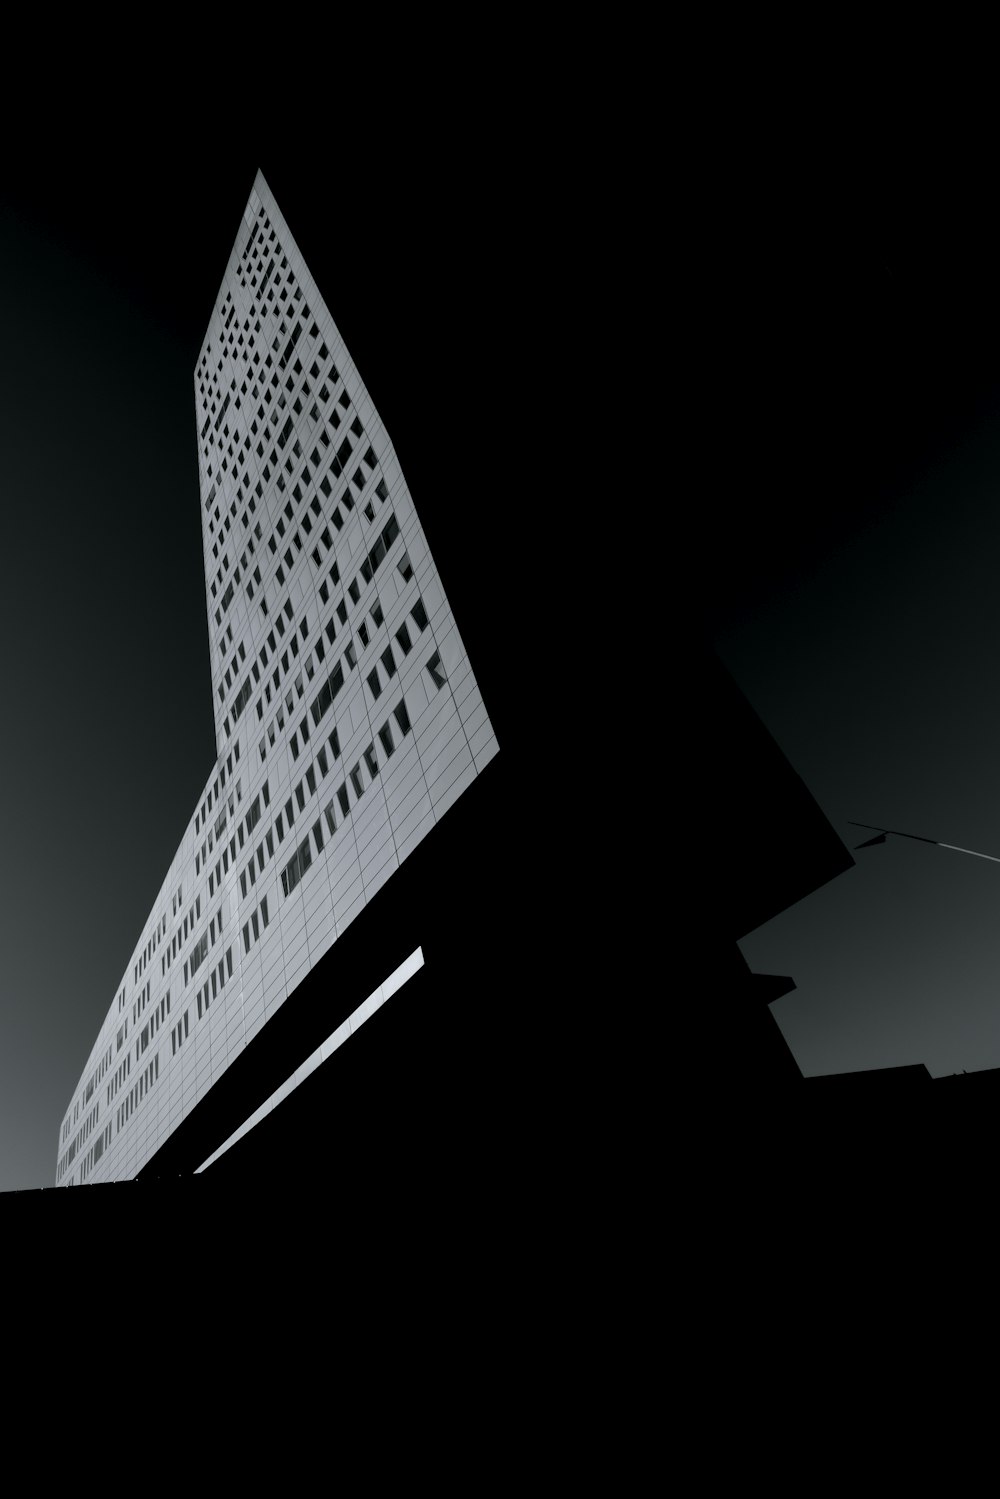 white and black building illustration